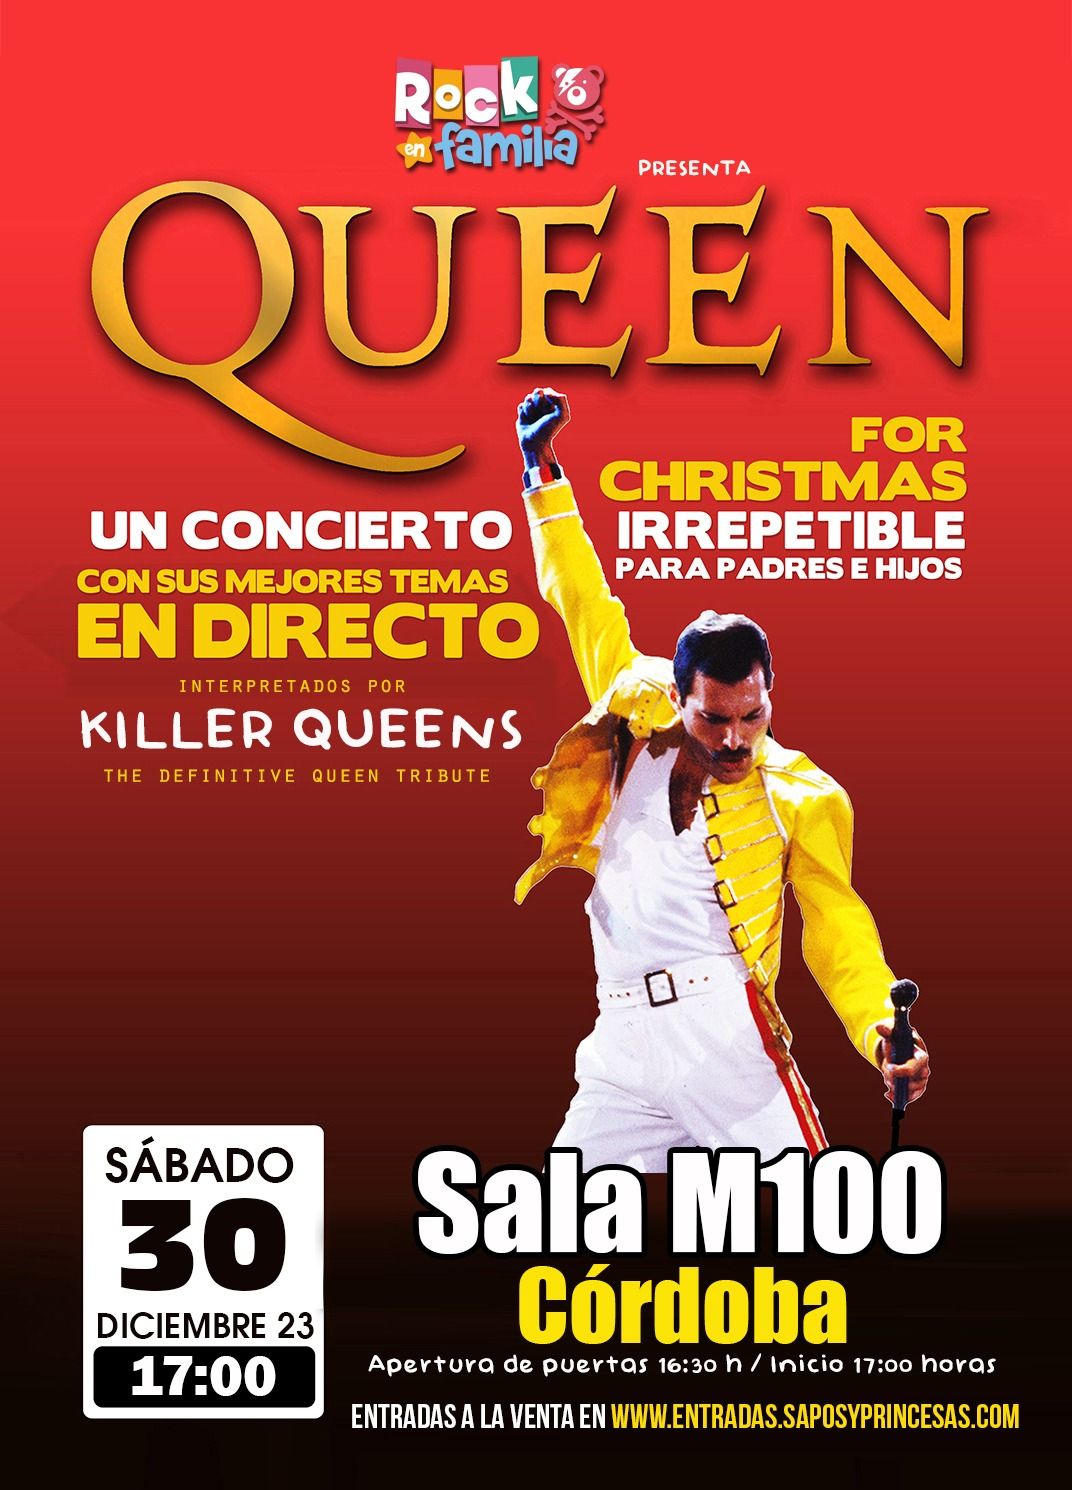 Rock en familia presenta Queen for Christmas